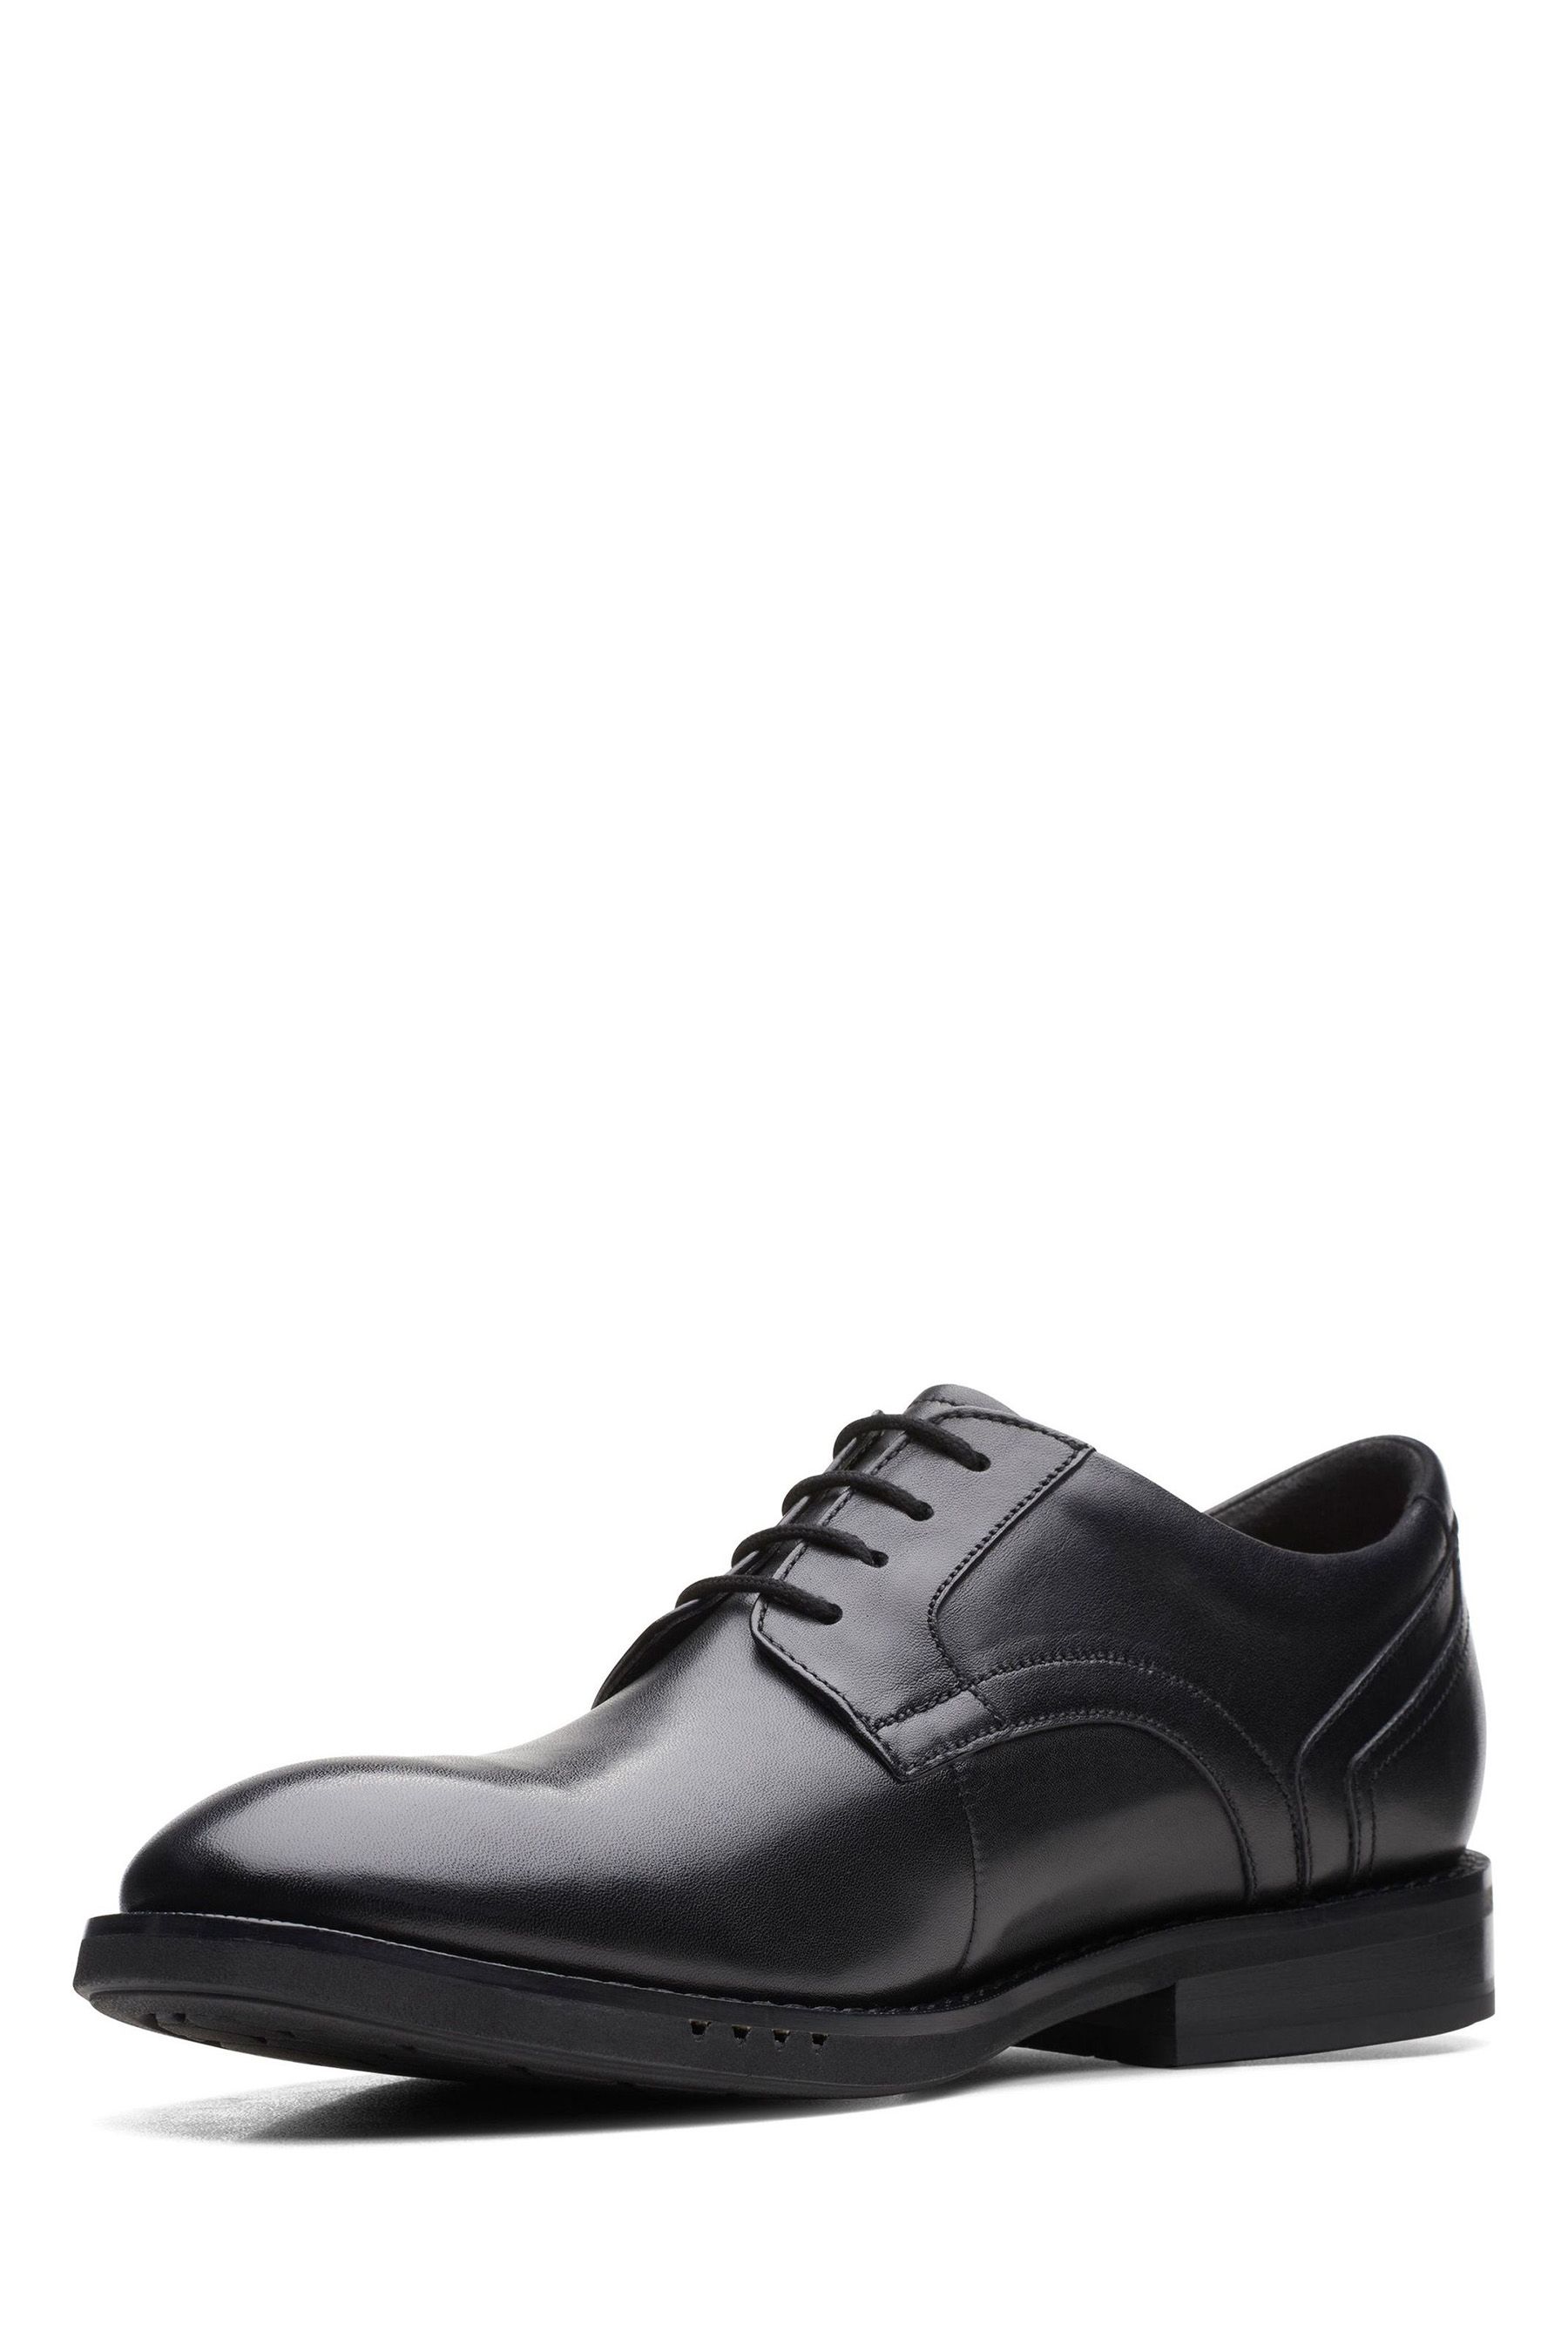 Buy Clarks Leather Un Hugh Lace Shoes from the Next UK online shop